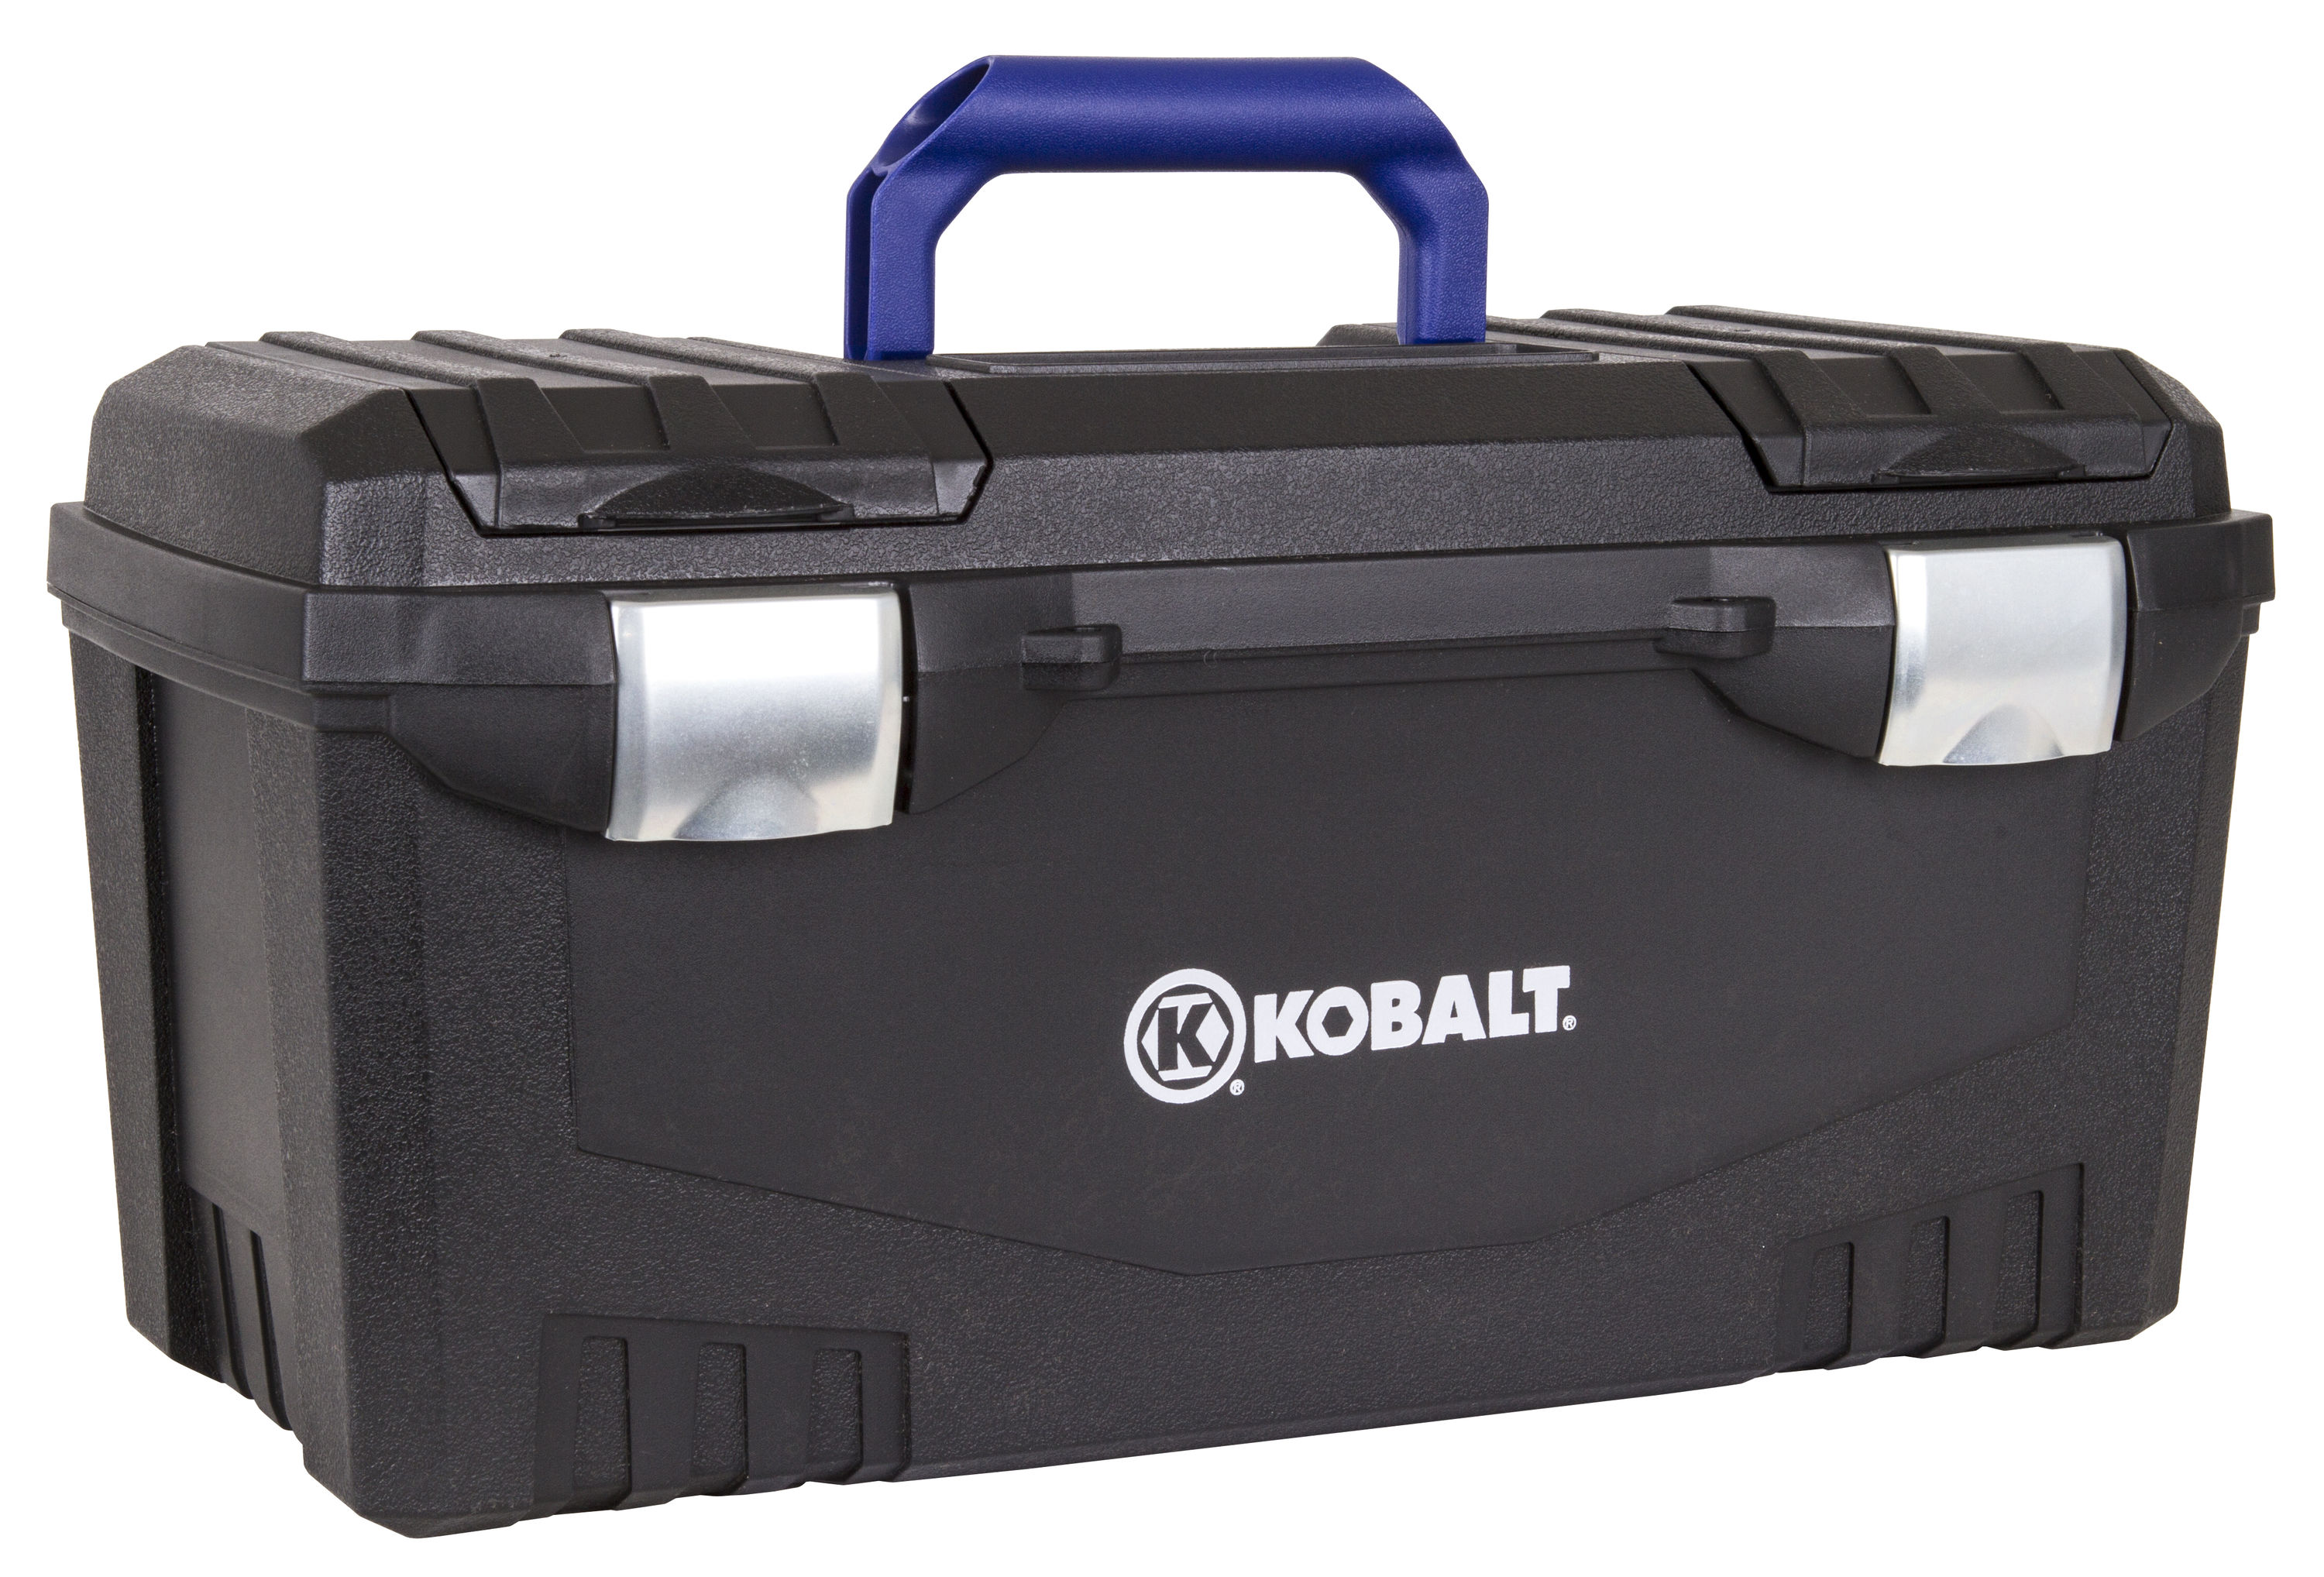 Kobalt 20-in Black Plastic Lockable Tool Box at